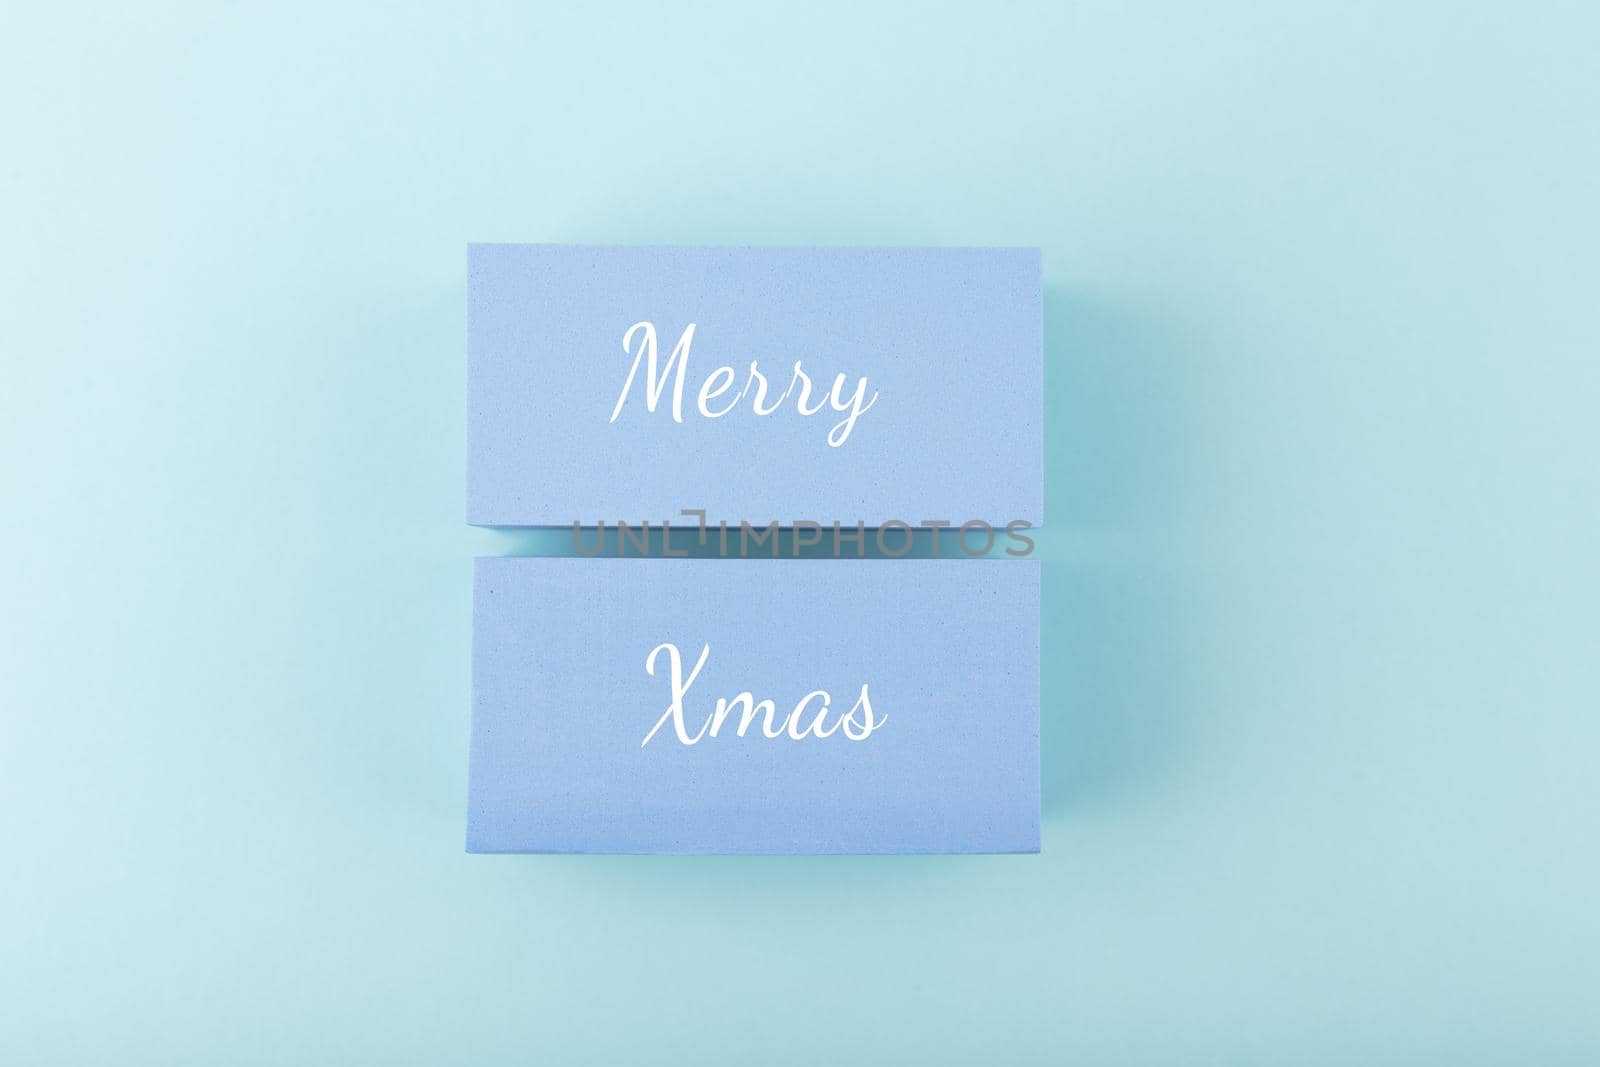 Merry Christmas minimal concept in light pastel blue colors by Senorina_Irina